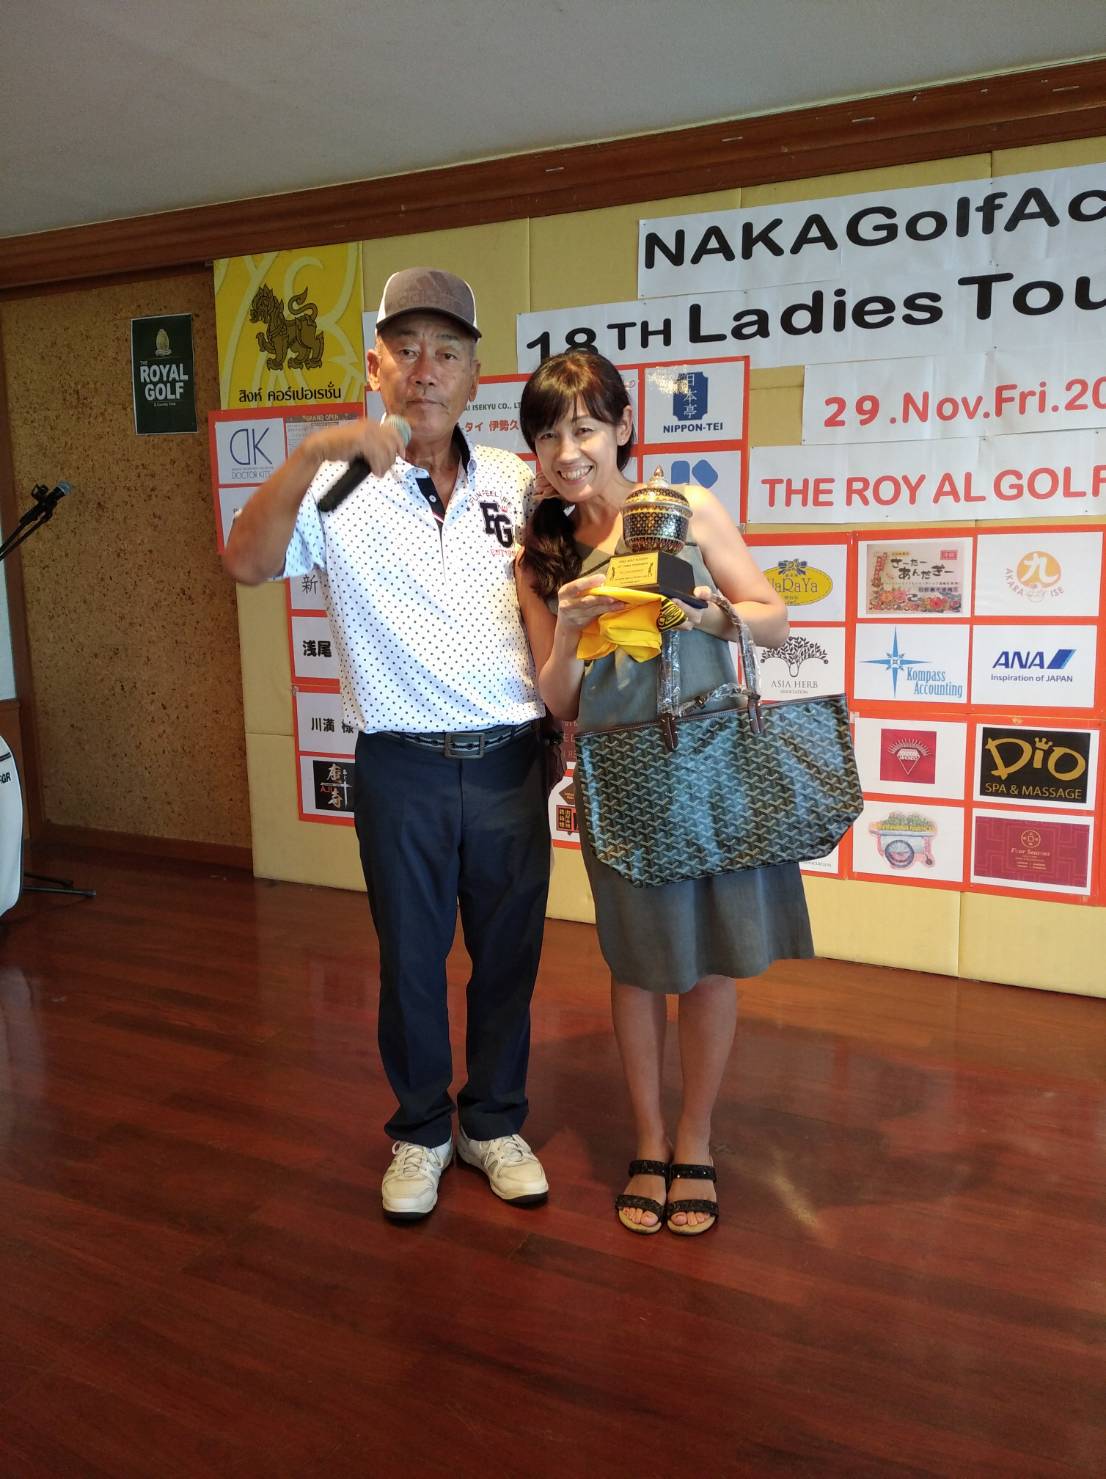 NAKA Golf Academy 18 Ladies Tournament開催